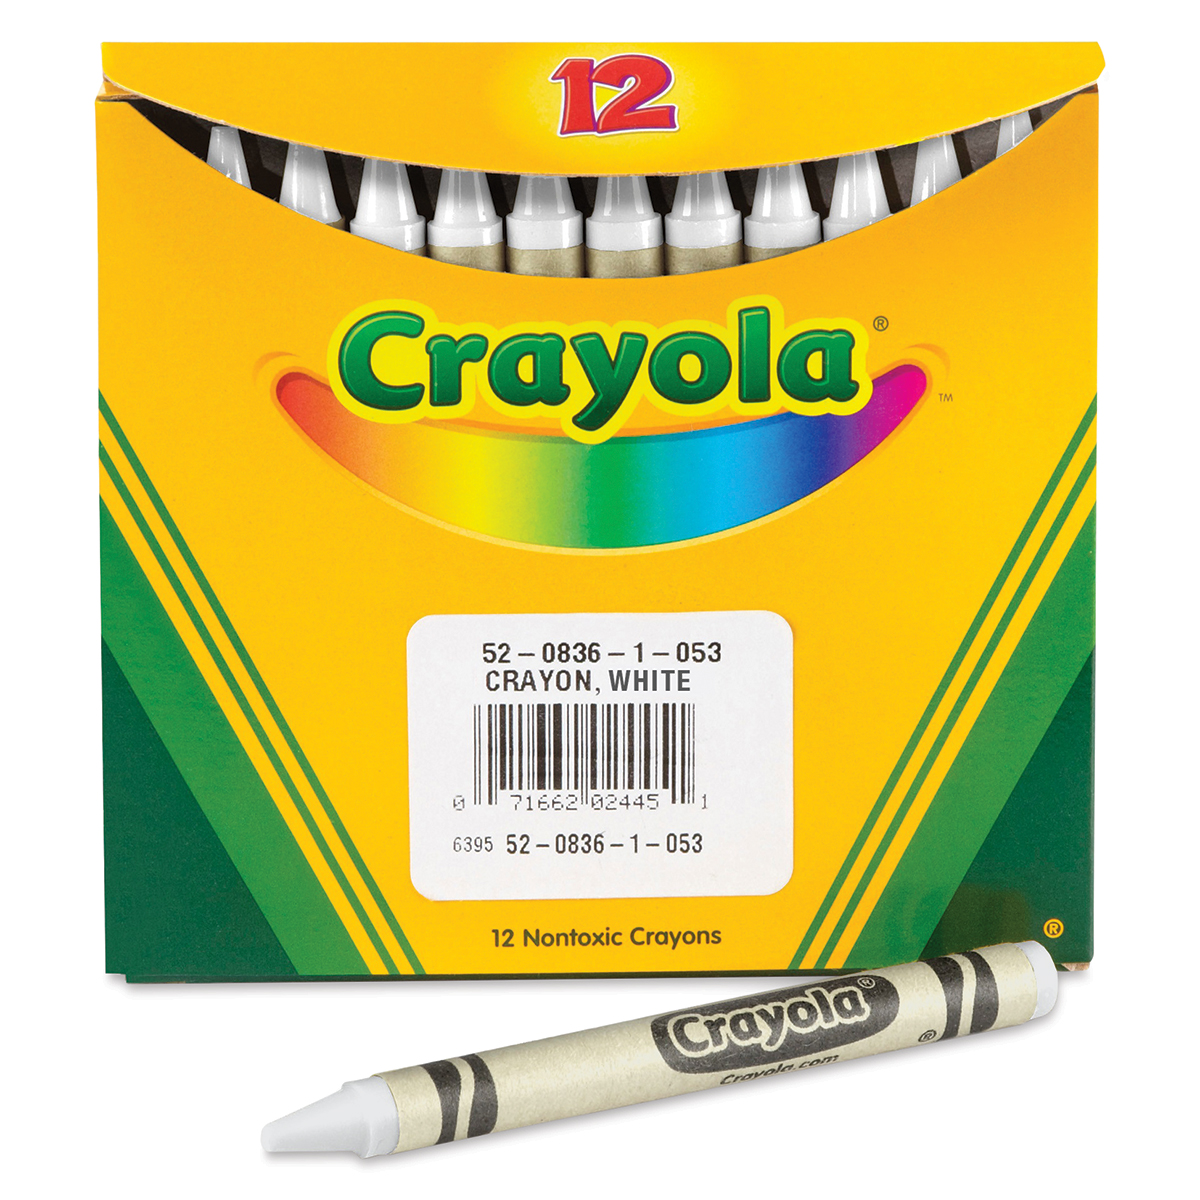 Chaka's World: White Crayons???